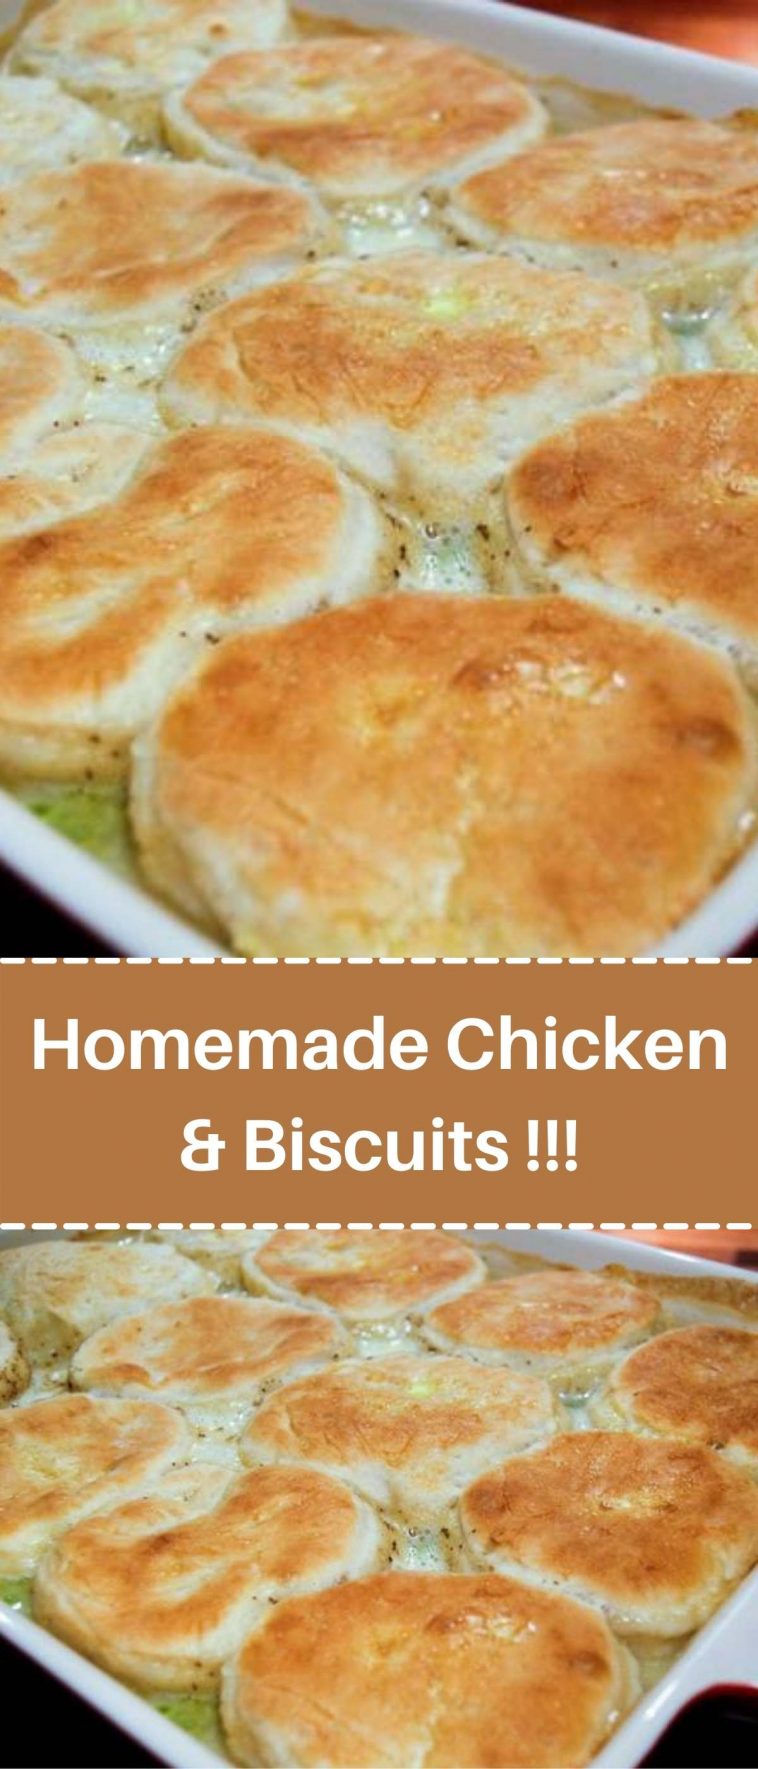 Homemade Chicken & Biscuits !!!